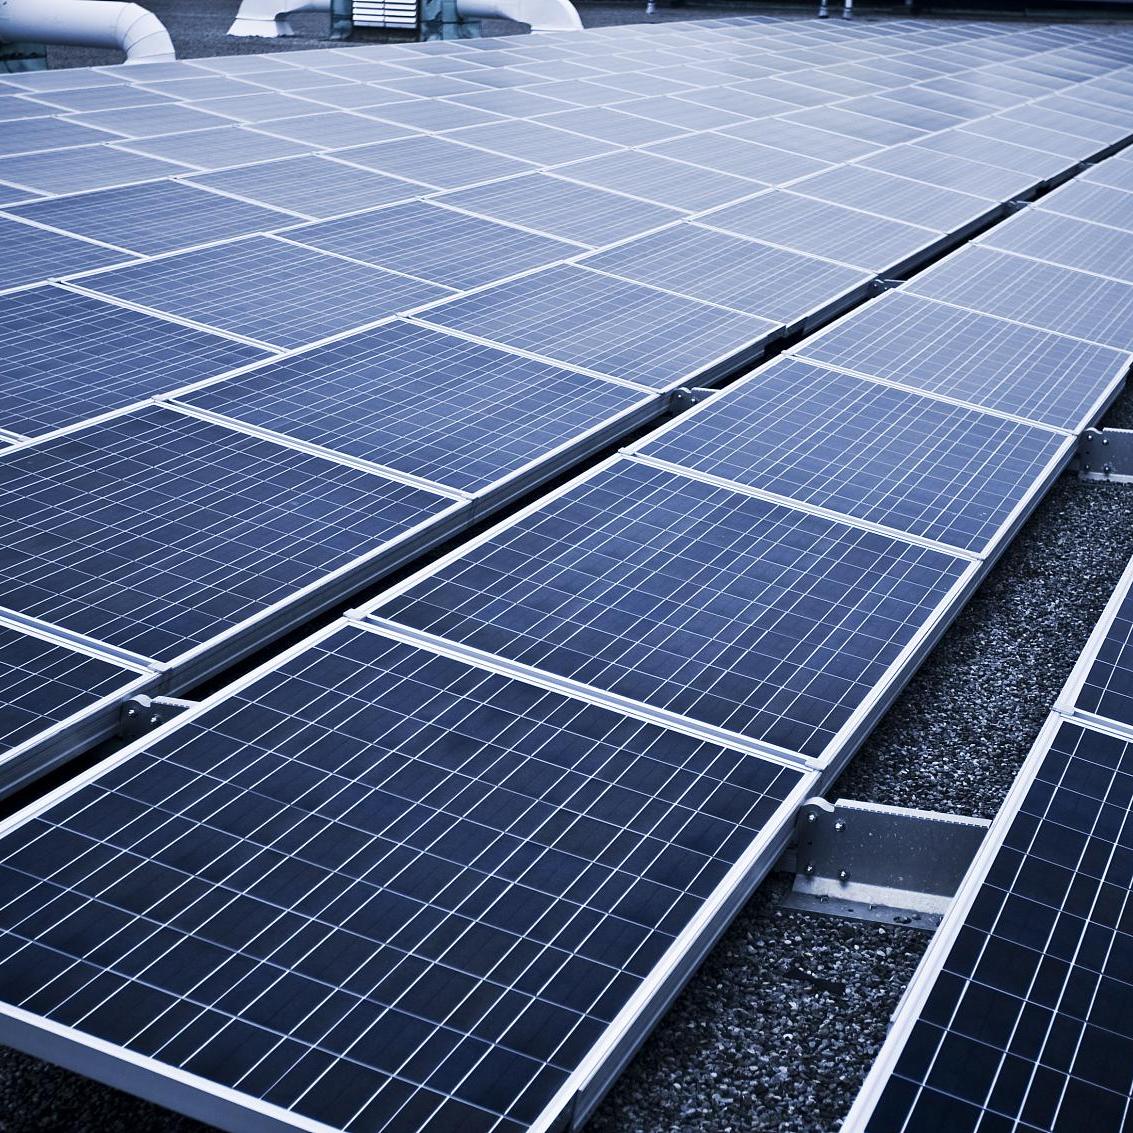 Photovoltaic leaders such as Longi, Sunshine, Huawei, JA Solar expand their 